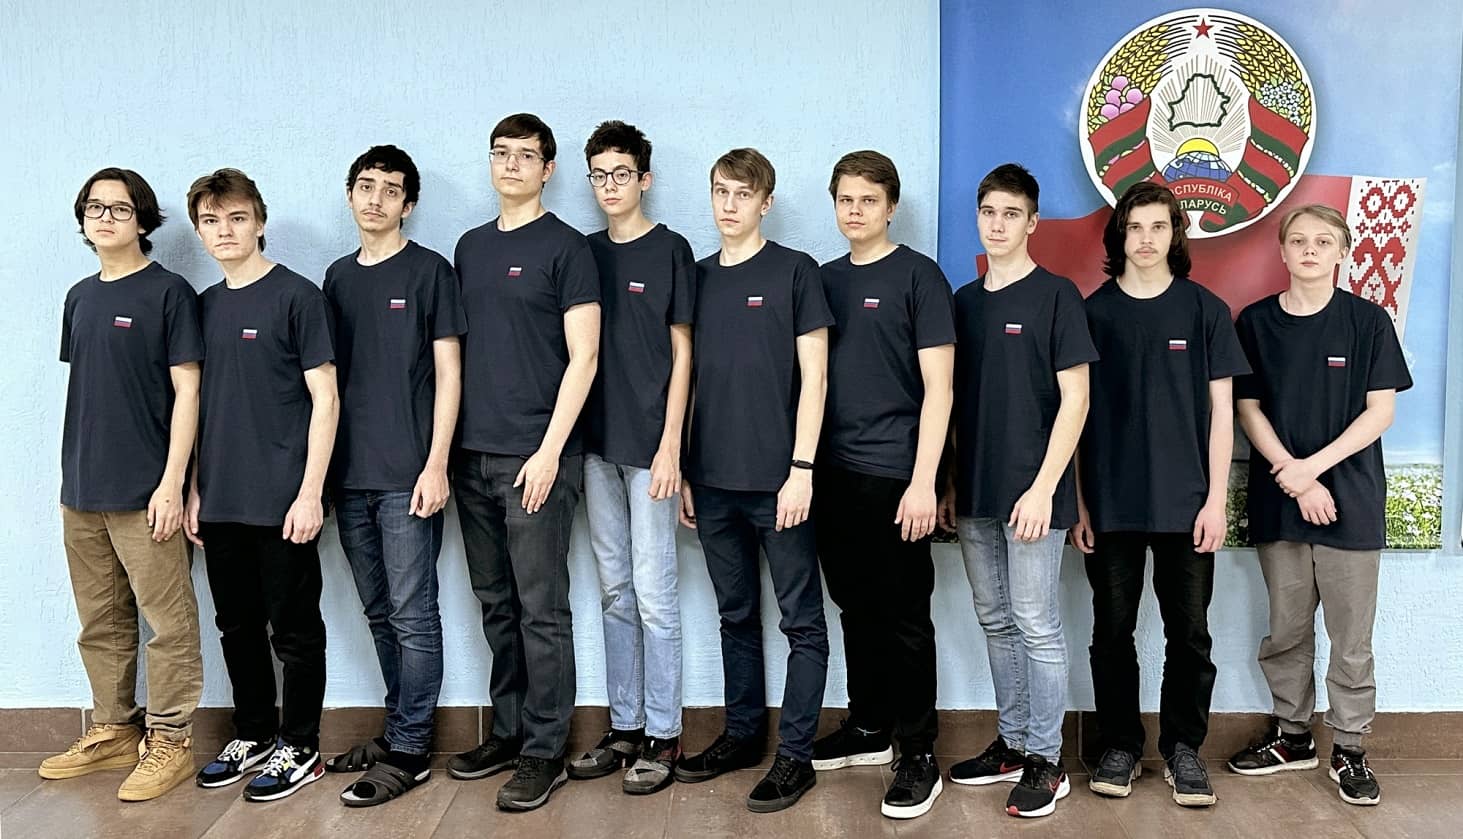 rossijskie-shkolniki-zavoevali-10-medalej-na-otkrytoj-belorusskoj-olimpiade-po-fizike